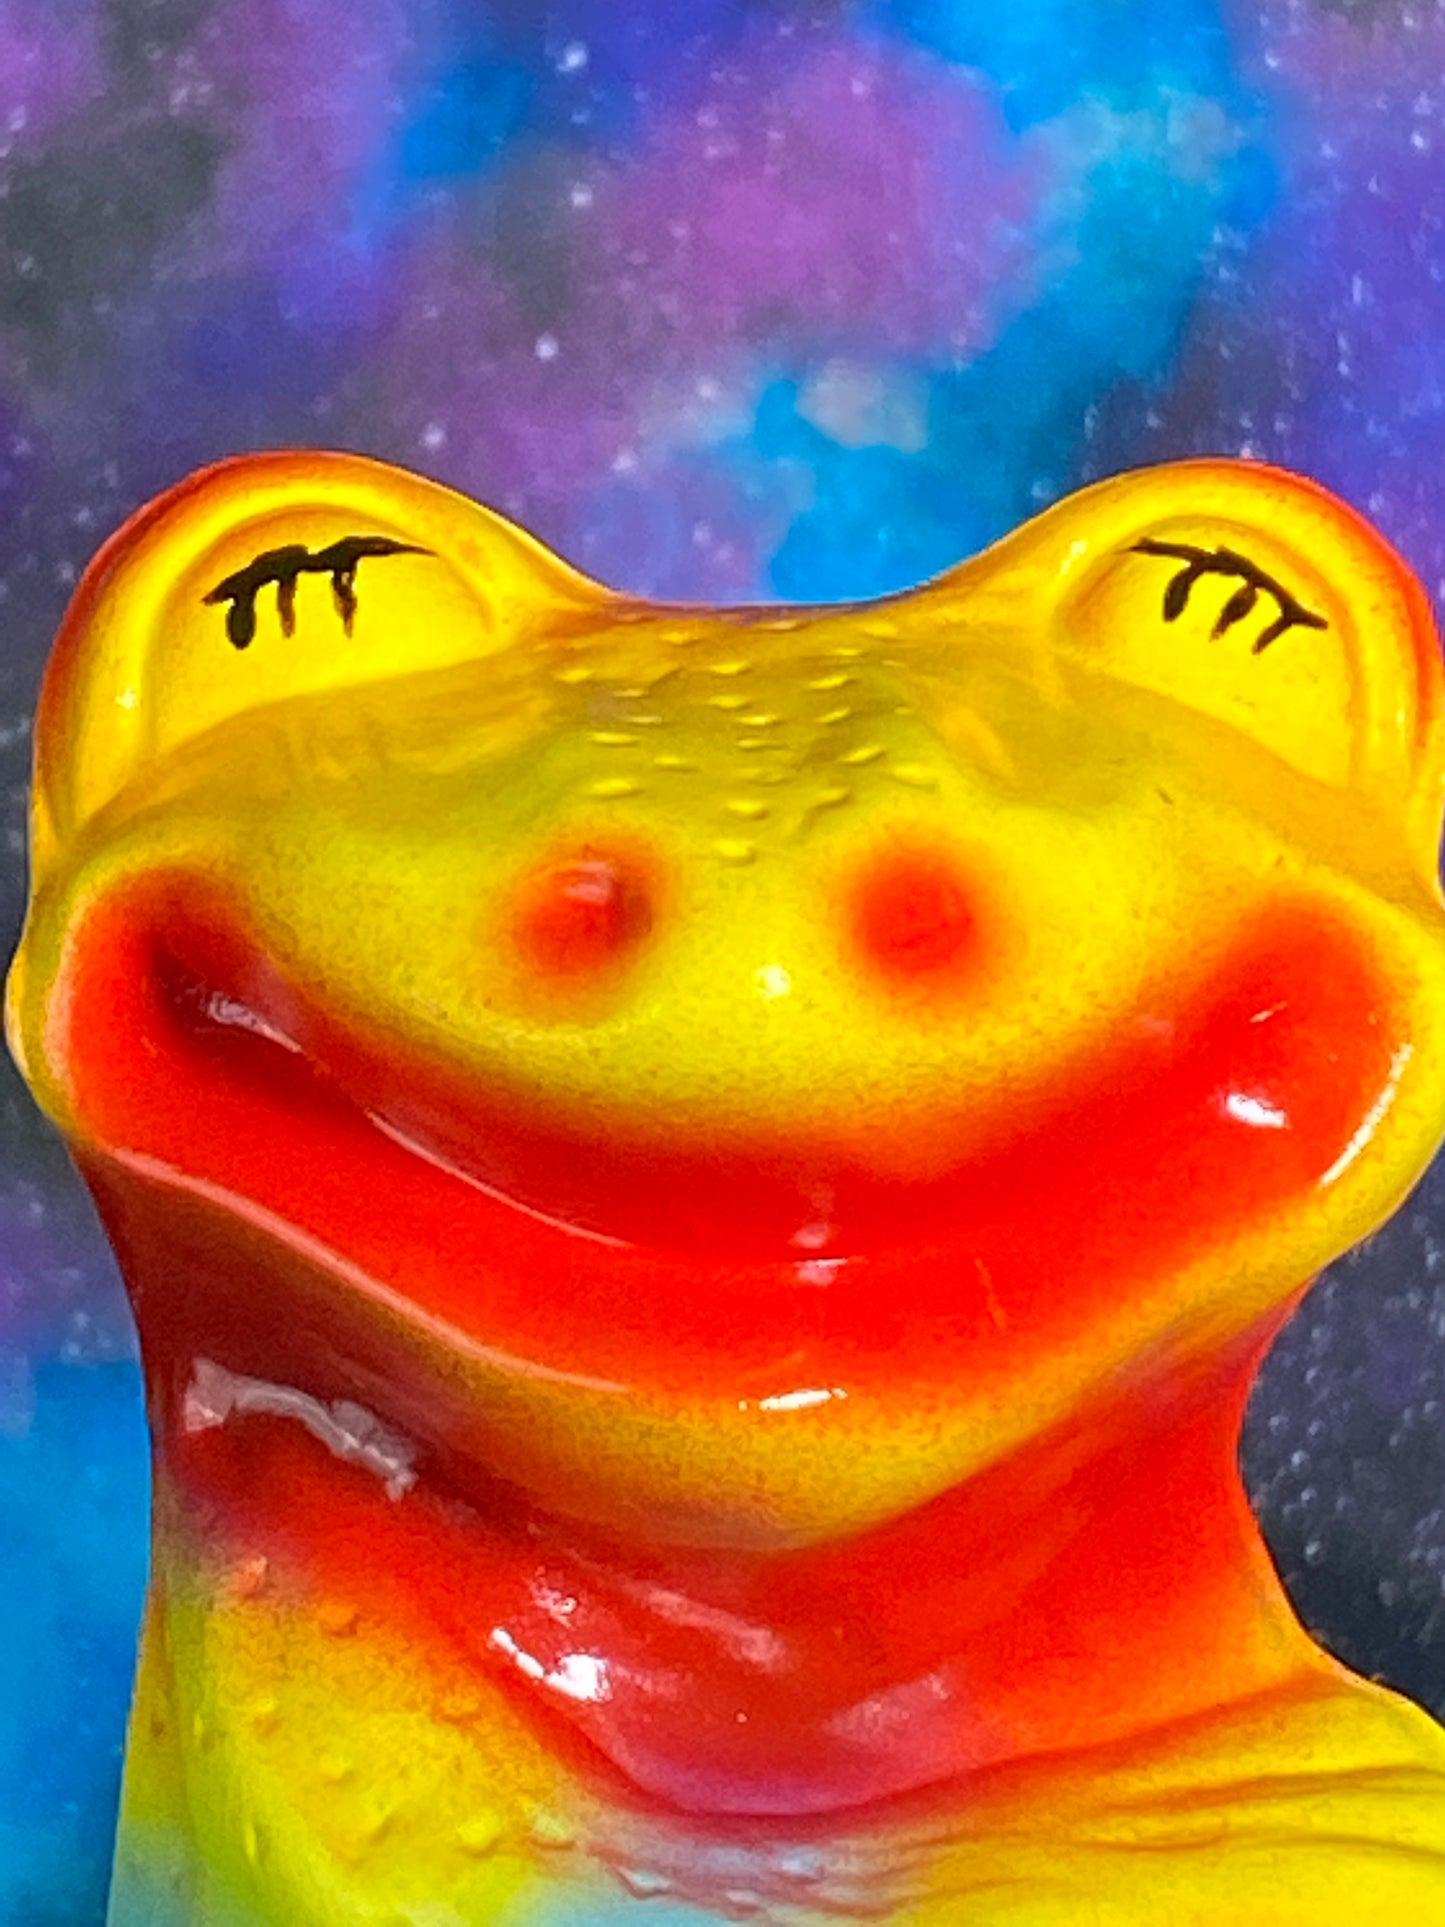 The Ceramic Frog That Looks Like This Ugly Donkey I Saw On EBay